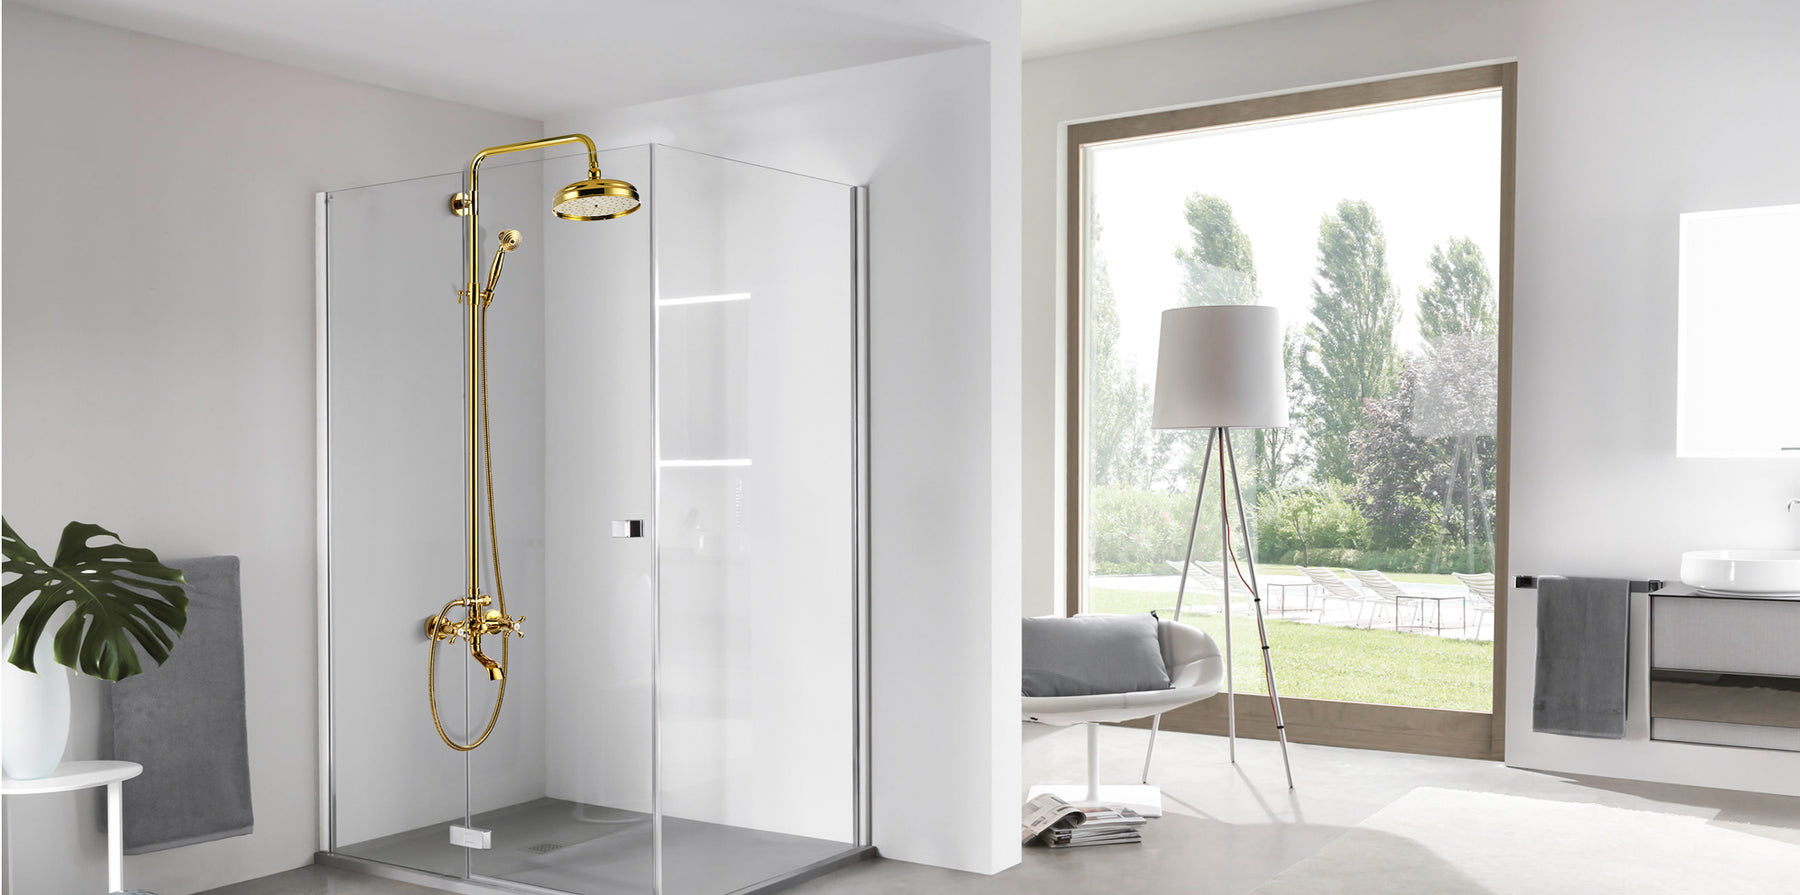 Gold Polished Shower Faucet Sets 8 Inch Rainfall Shower Head Bathtub 2 Cross Knobs Mixer Rain Shower System Adjustable Hand Held Spray Shower Unit